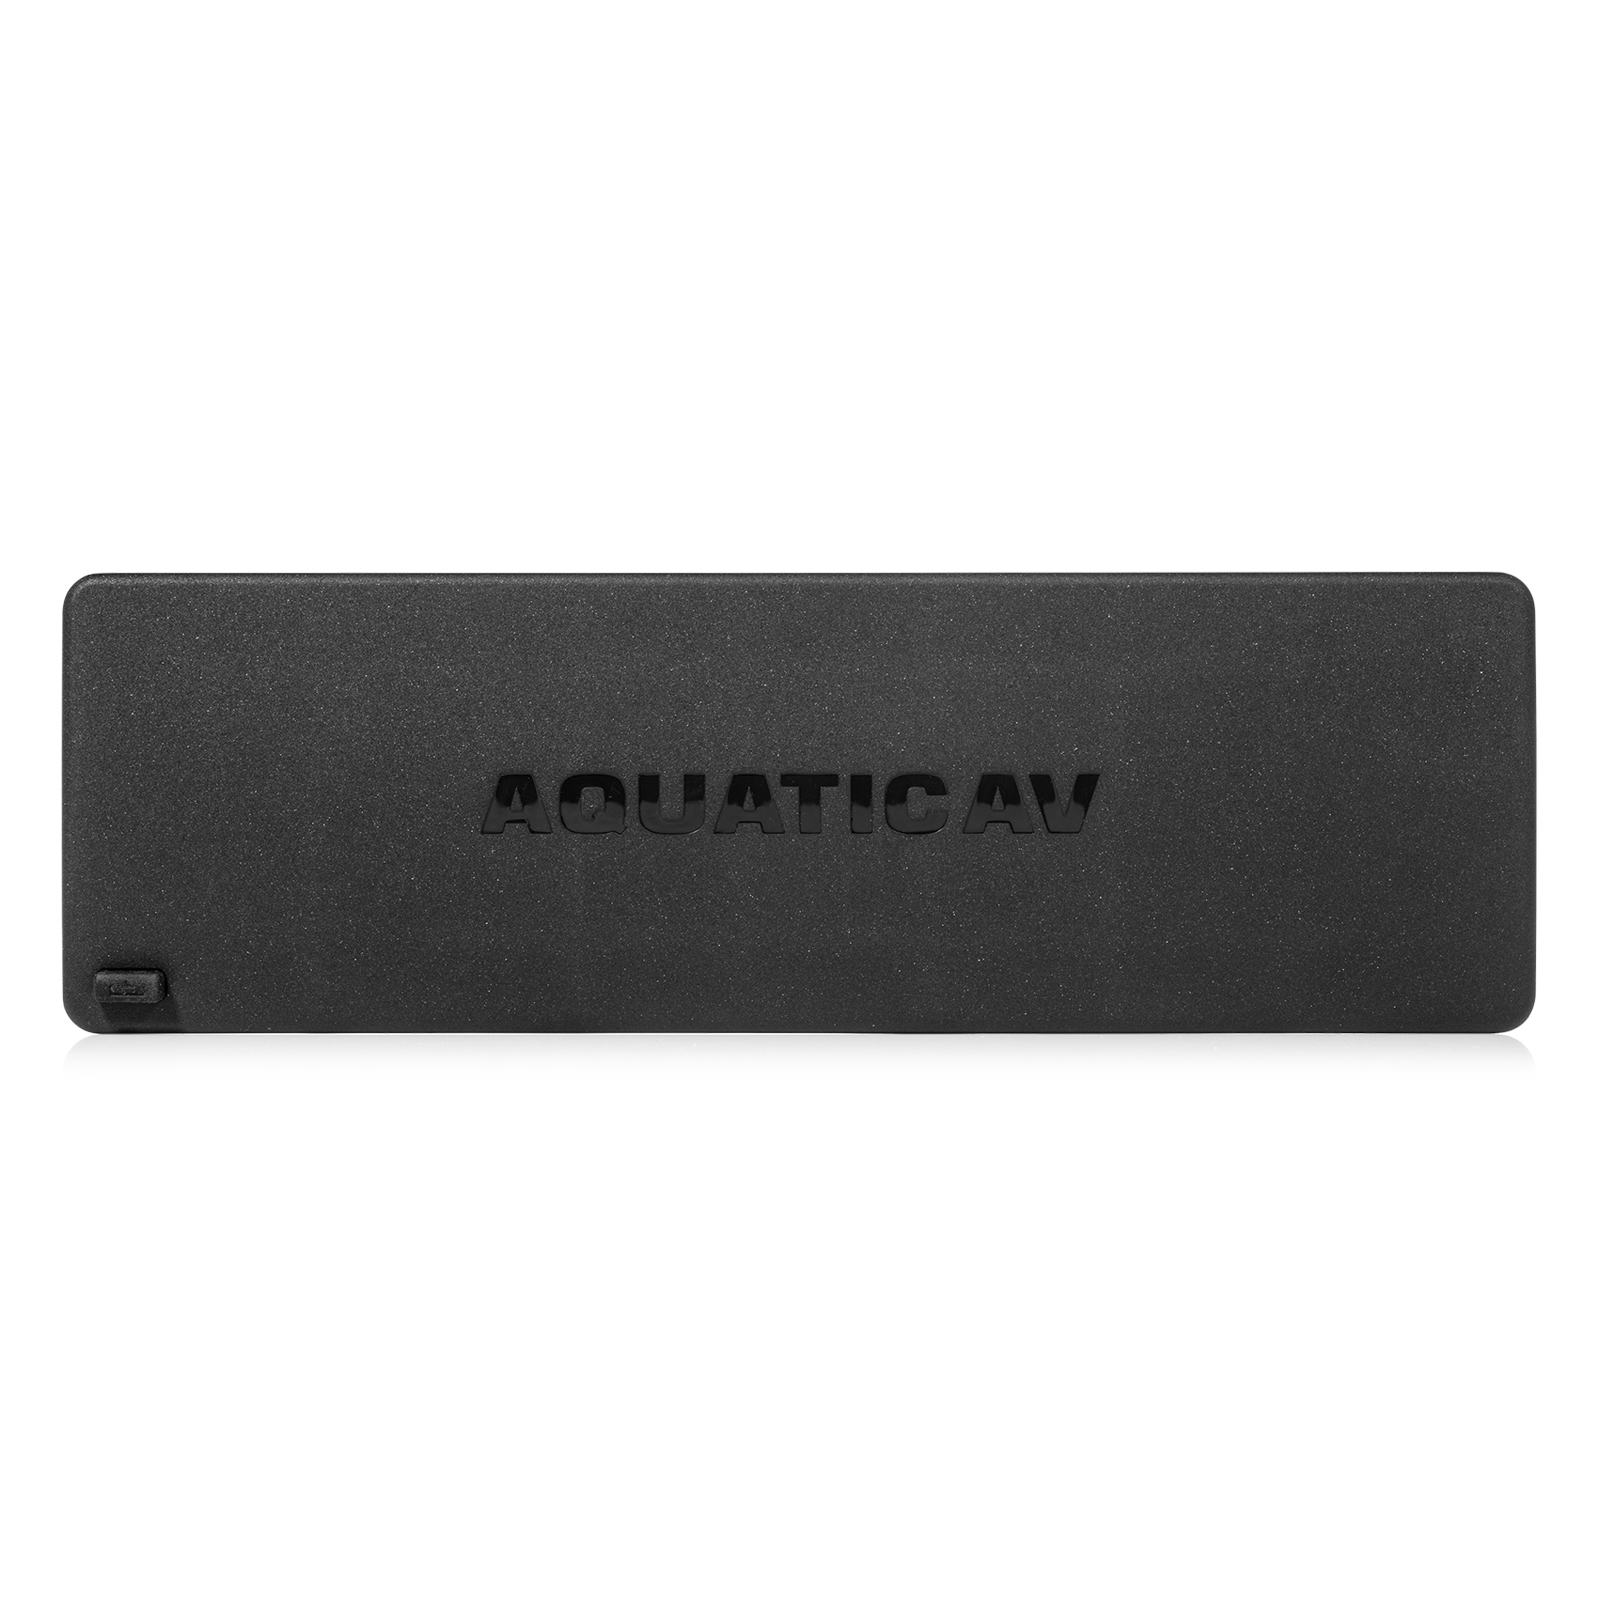 Aquatic AV AQ-MP-5DF Black Protective Cover Dummy Face Plate For MP Series Aquatic AV Stereos